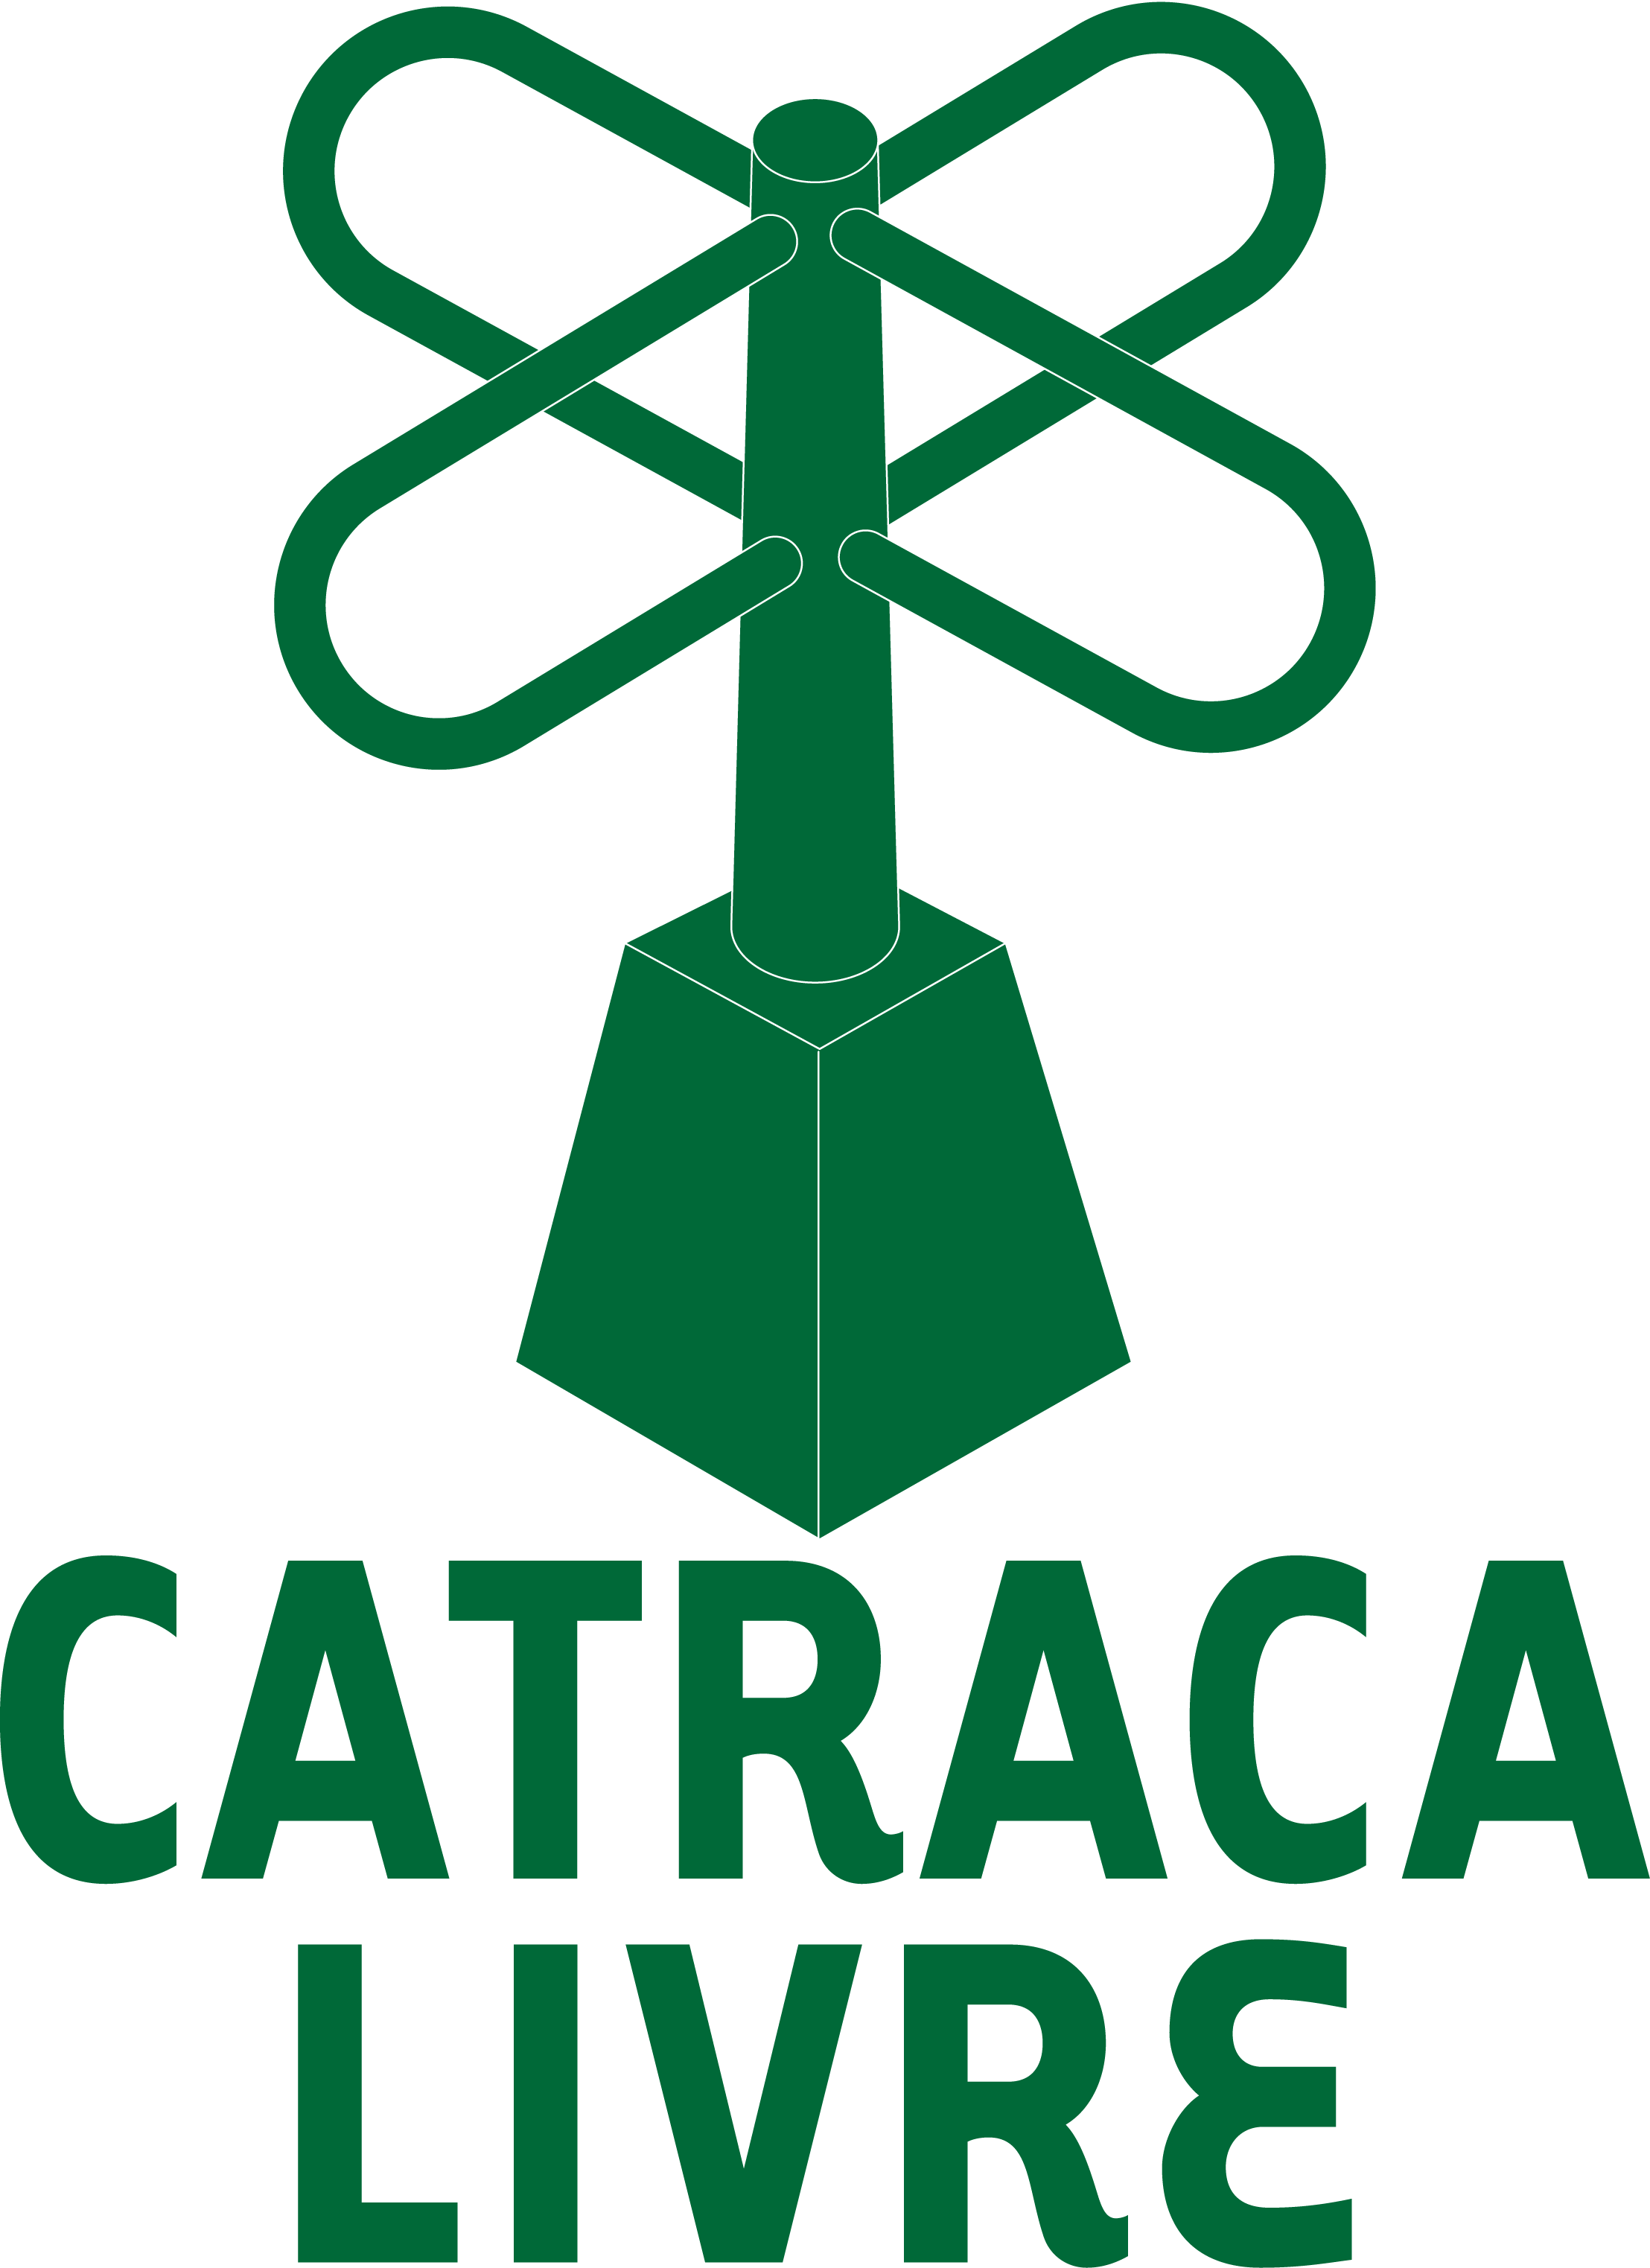 CatracaLivre_logo_marca_vertical_01